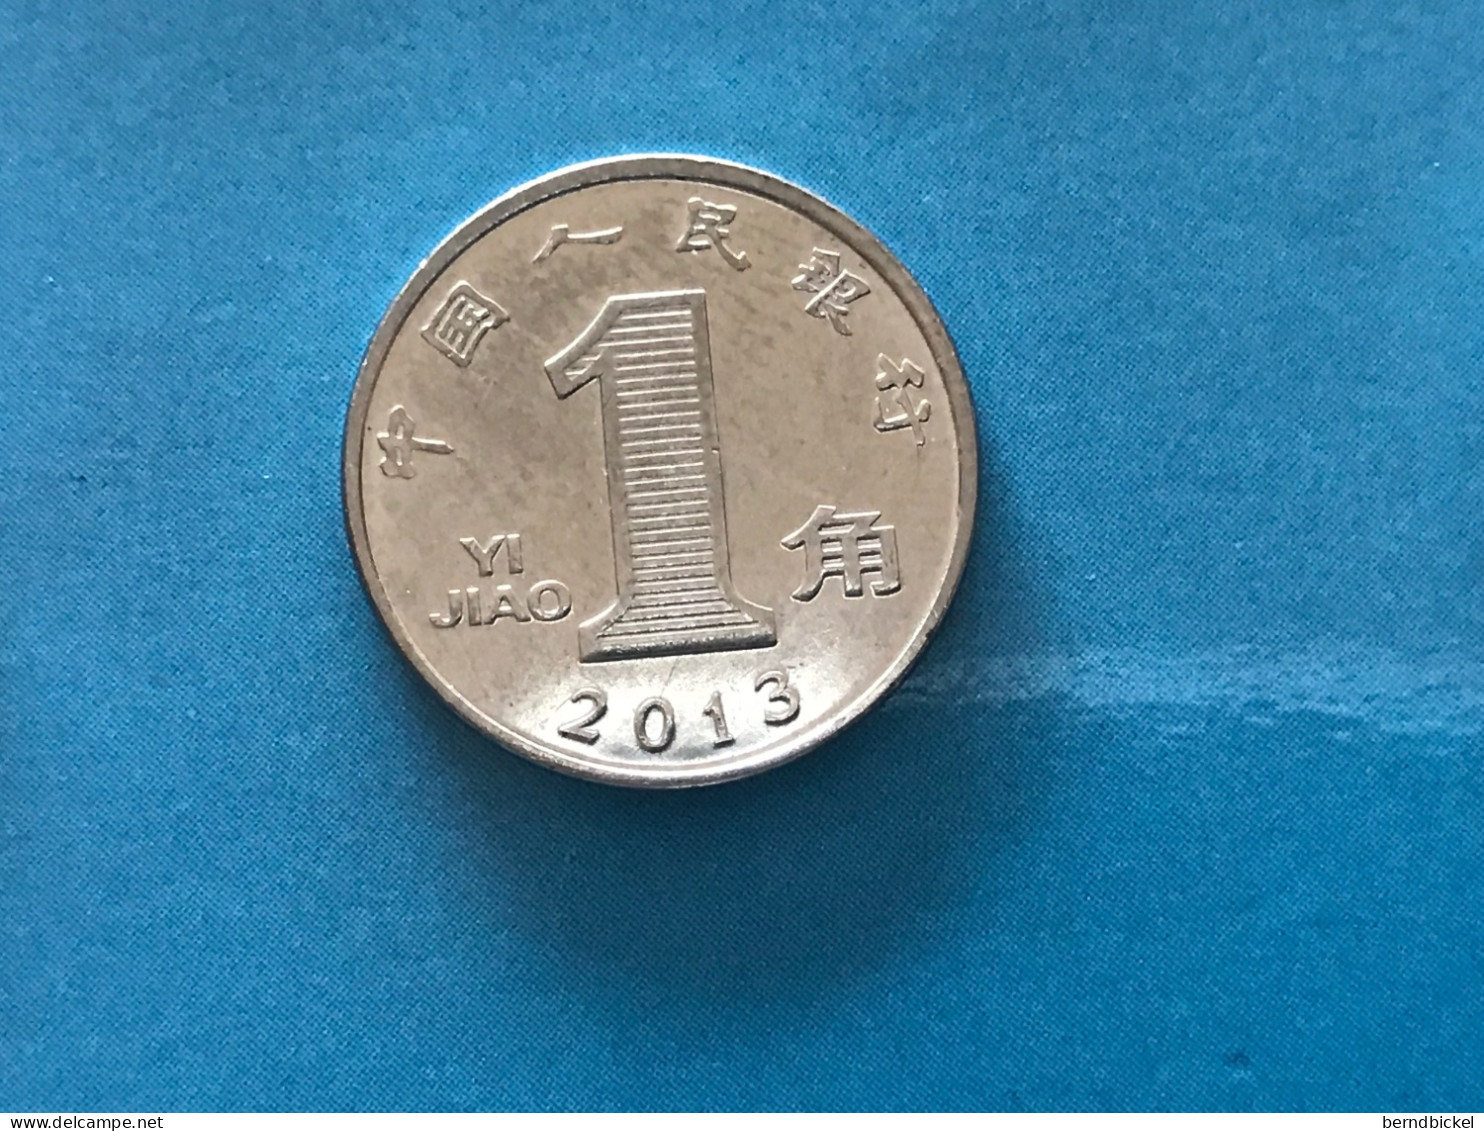 Münze Münzen Umlaufmünze China 1 Jiao 2013 - Chine